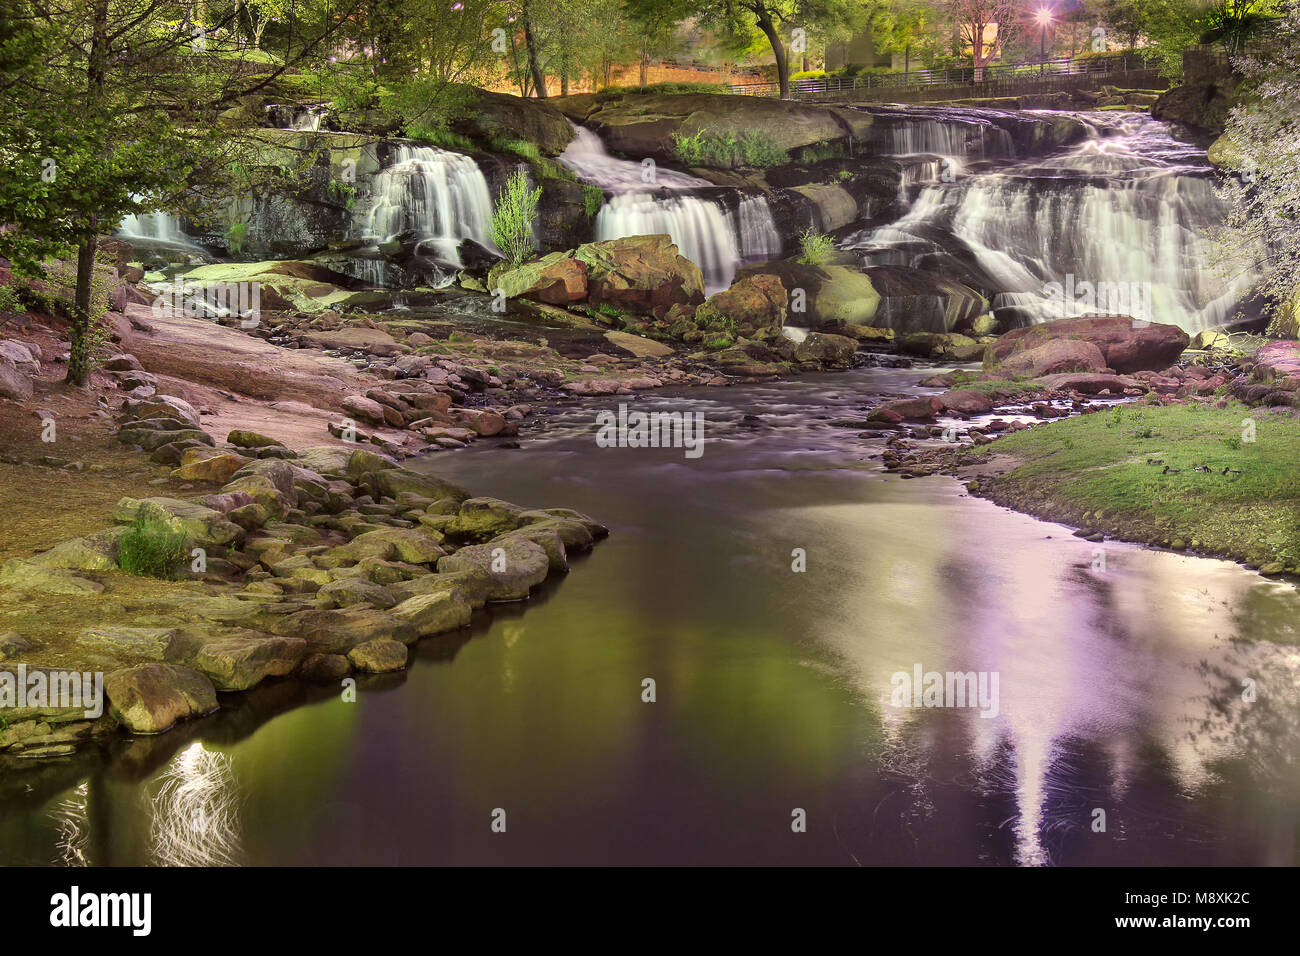 Iconic Greenville South Carolina Falls park waterfall at the heart of downtown at night Stock Photo